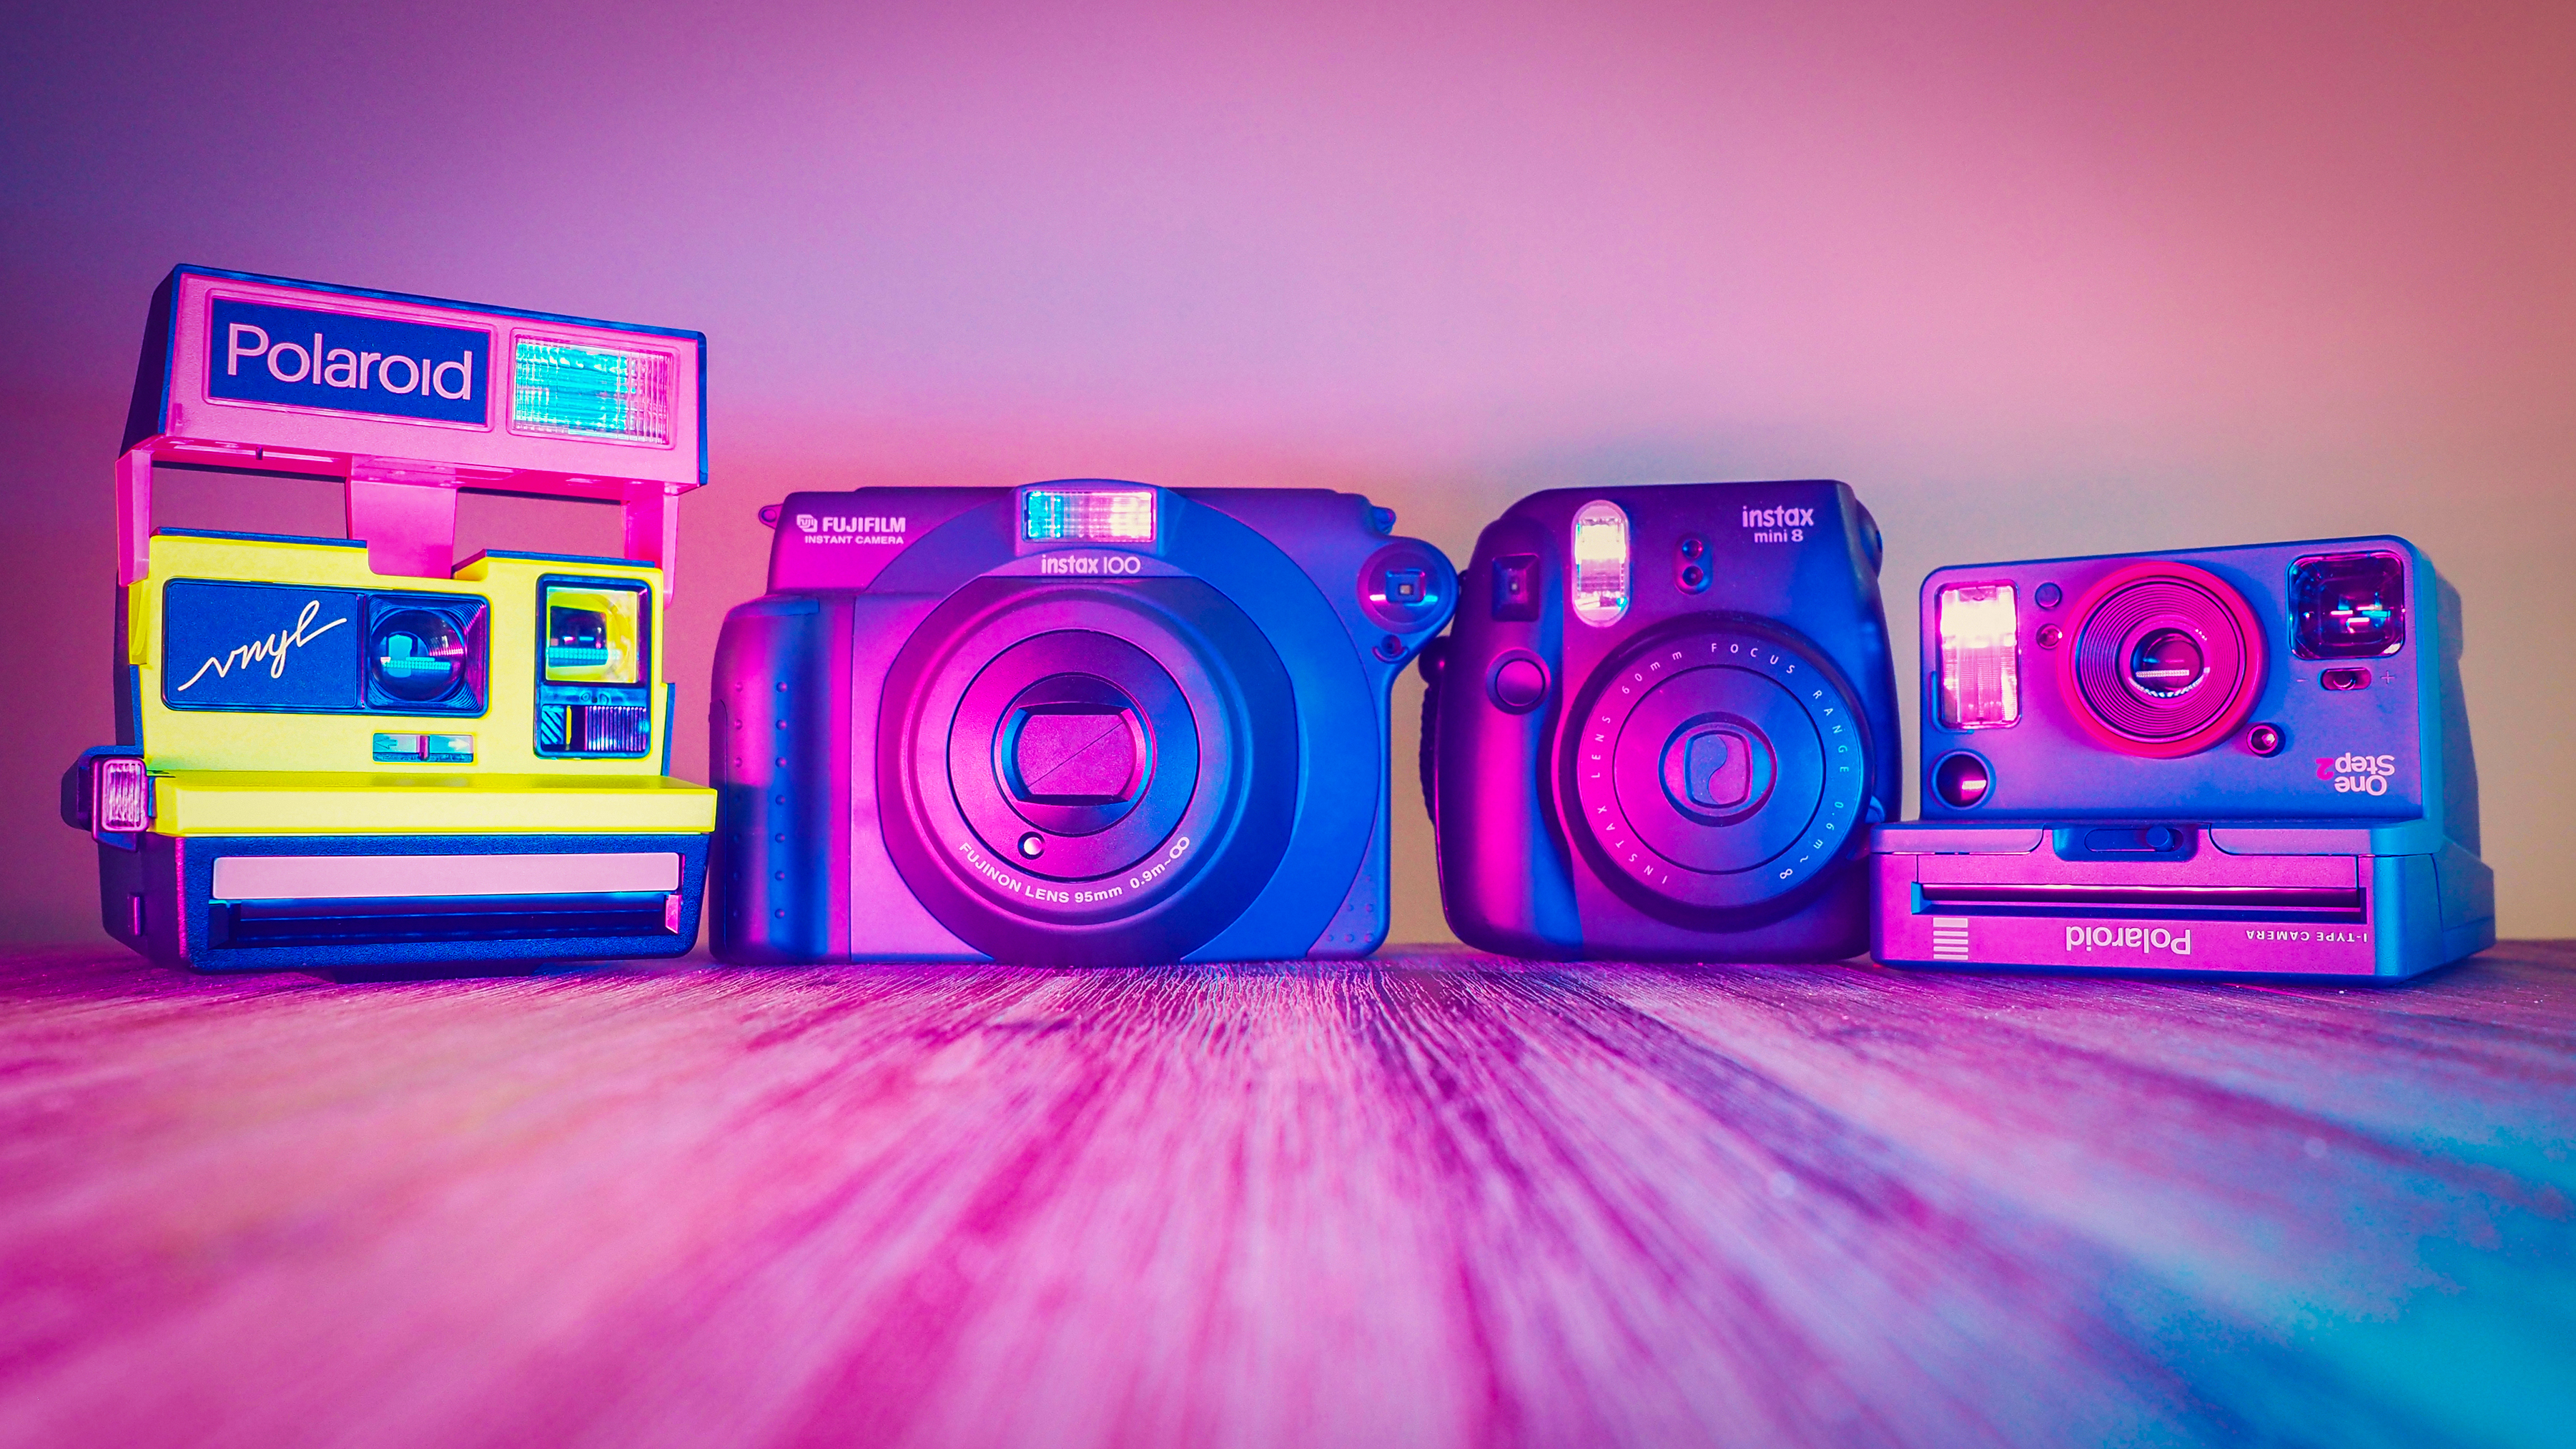 Fujifilm introduces stylish Instax Mini 40 instant camera: Digital